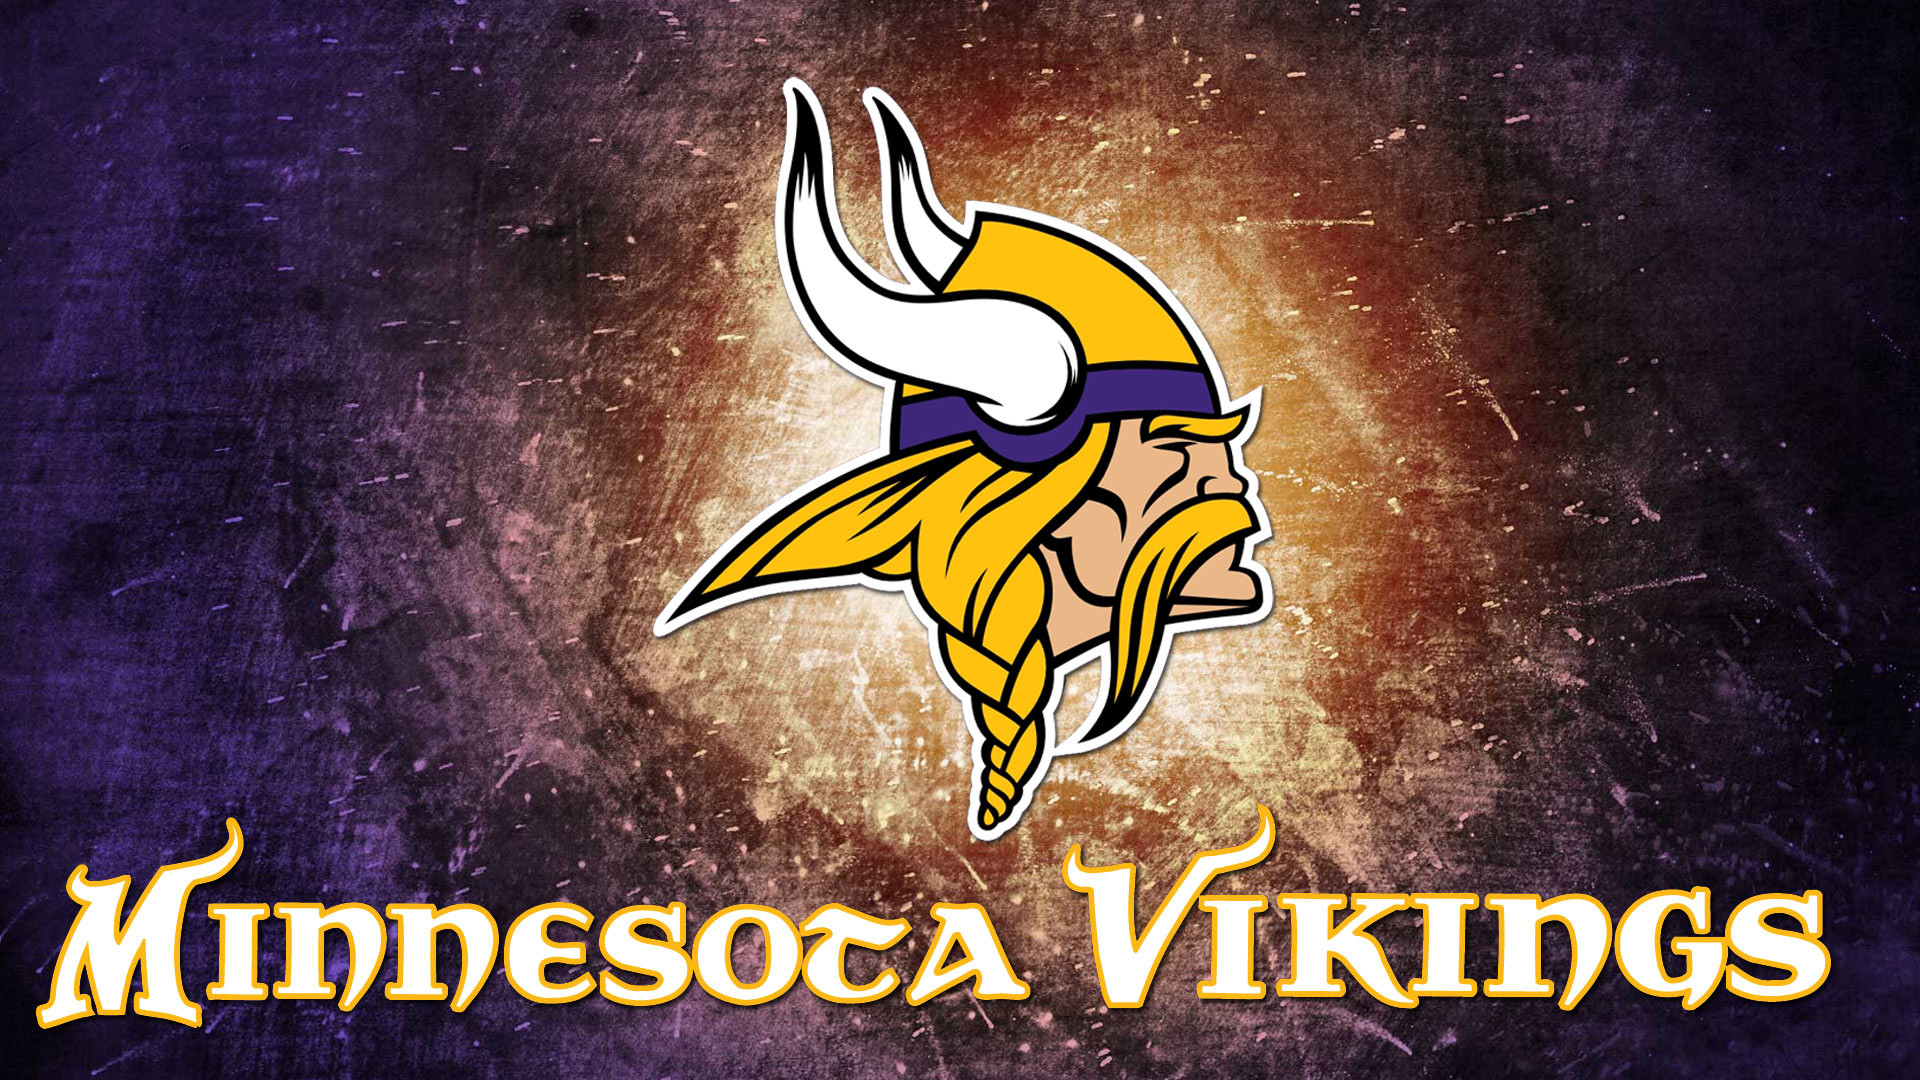 1920x1080 Minnesota Vikings logo Hd 1080p high quality Wallpaper screen size .